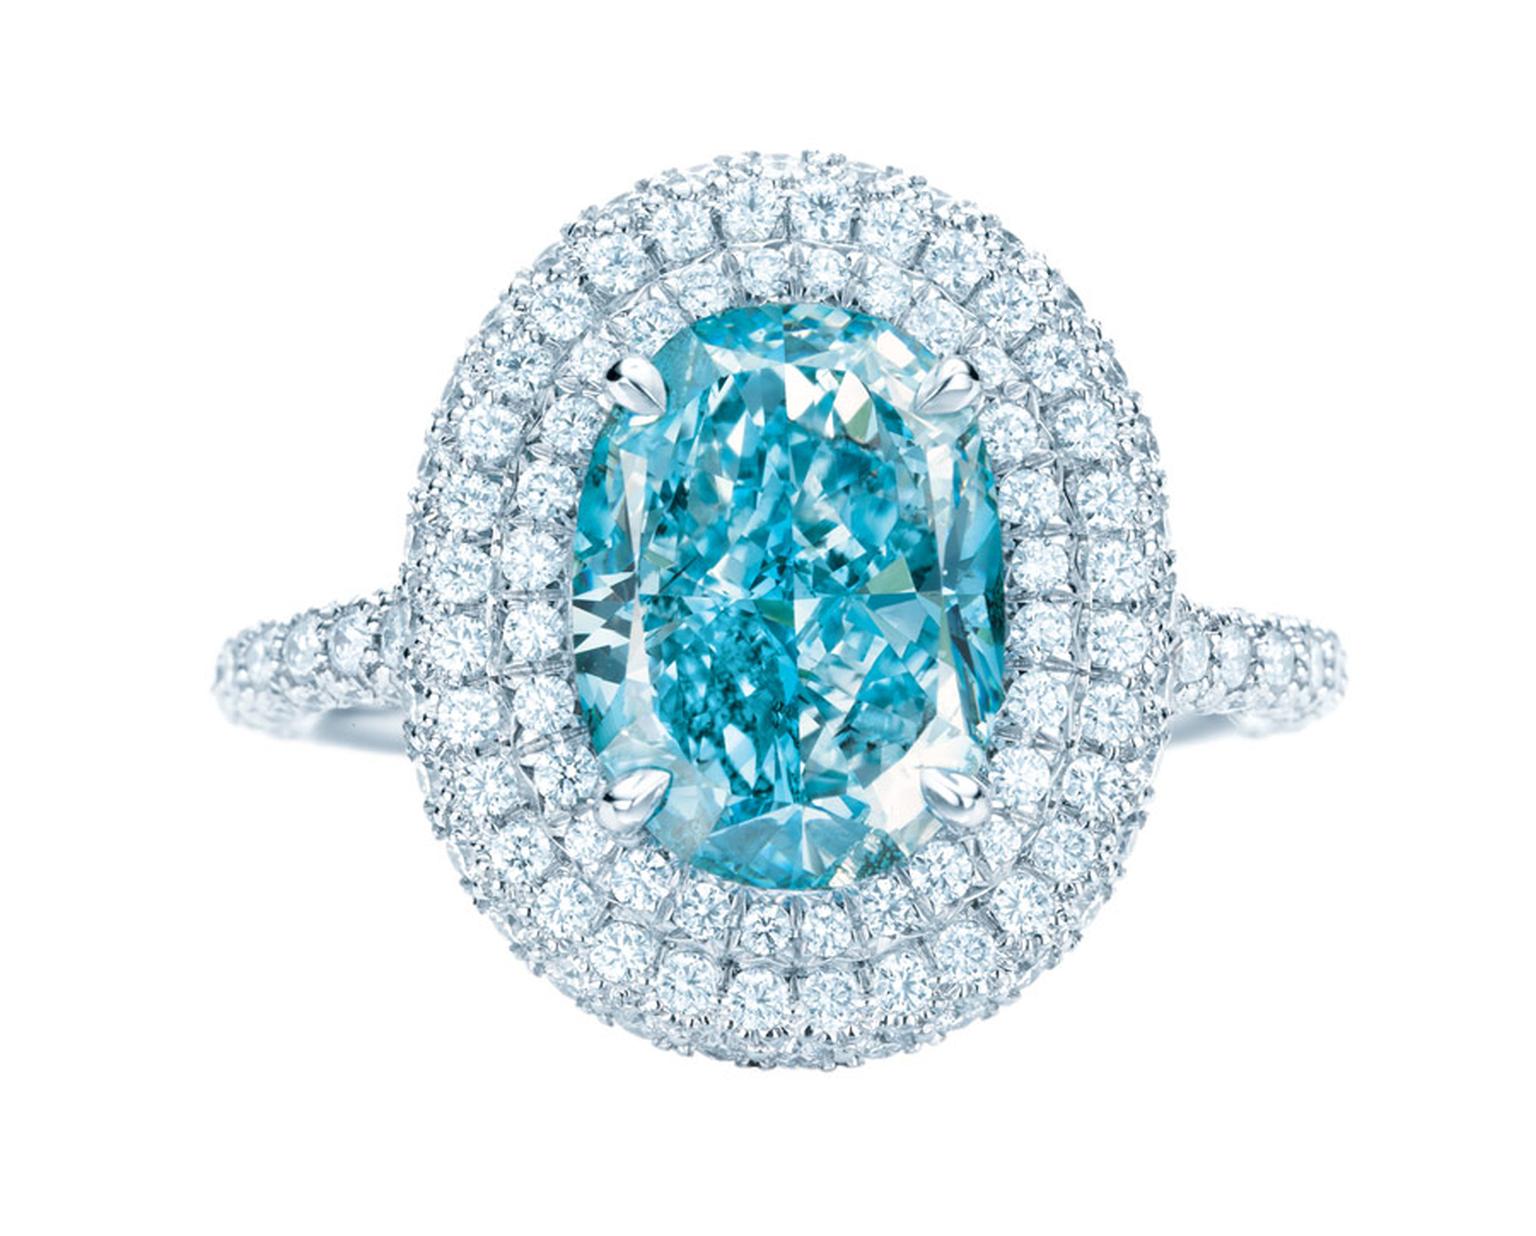 Tiffany-Blue-diamond-ring.jpg